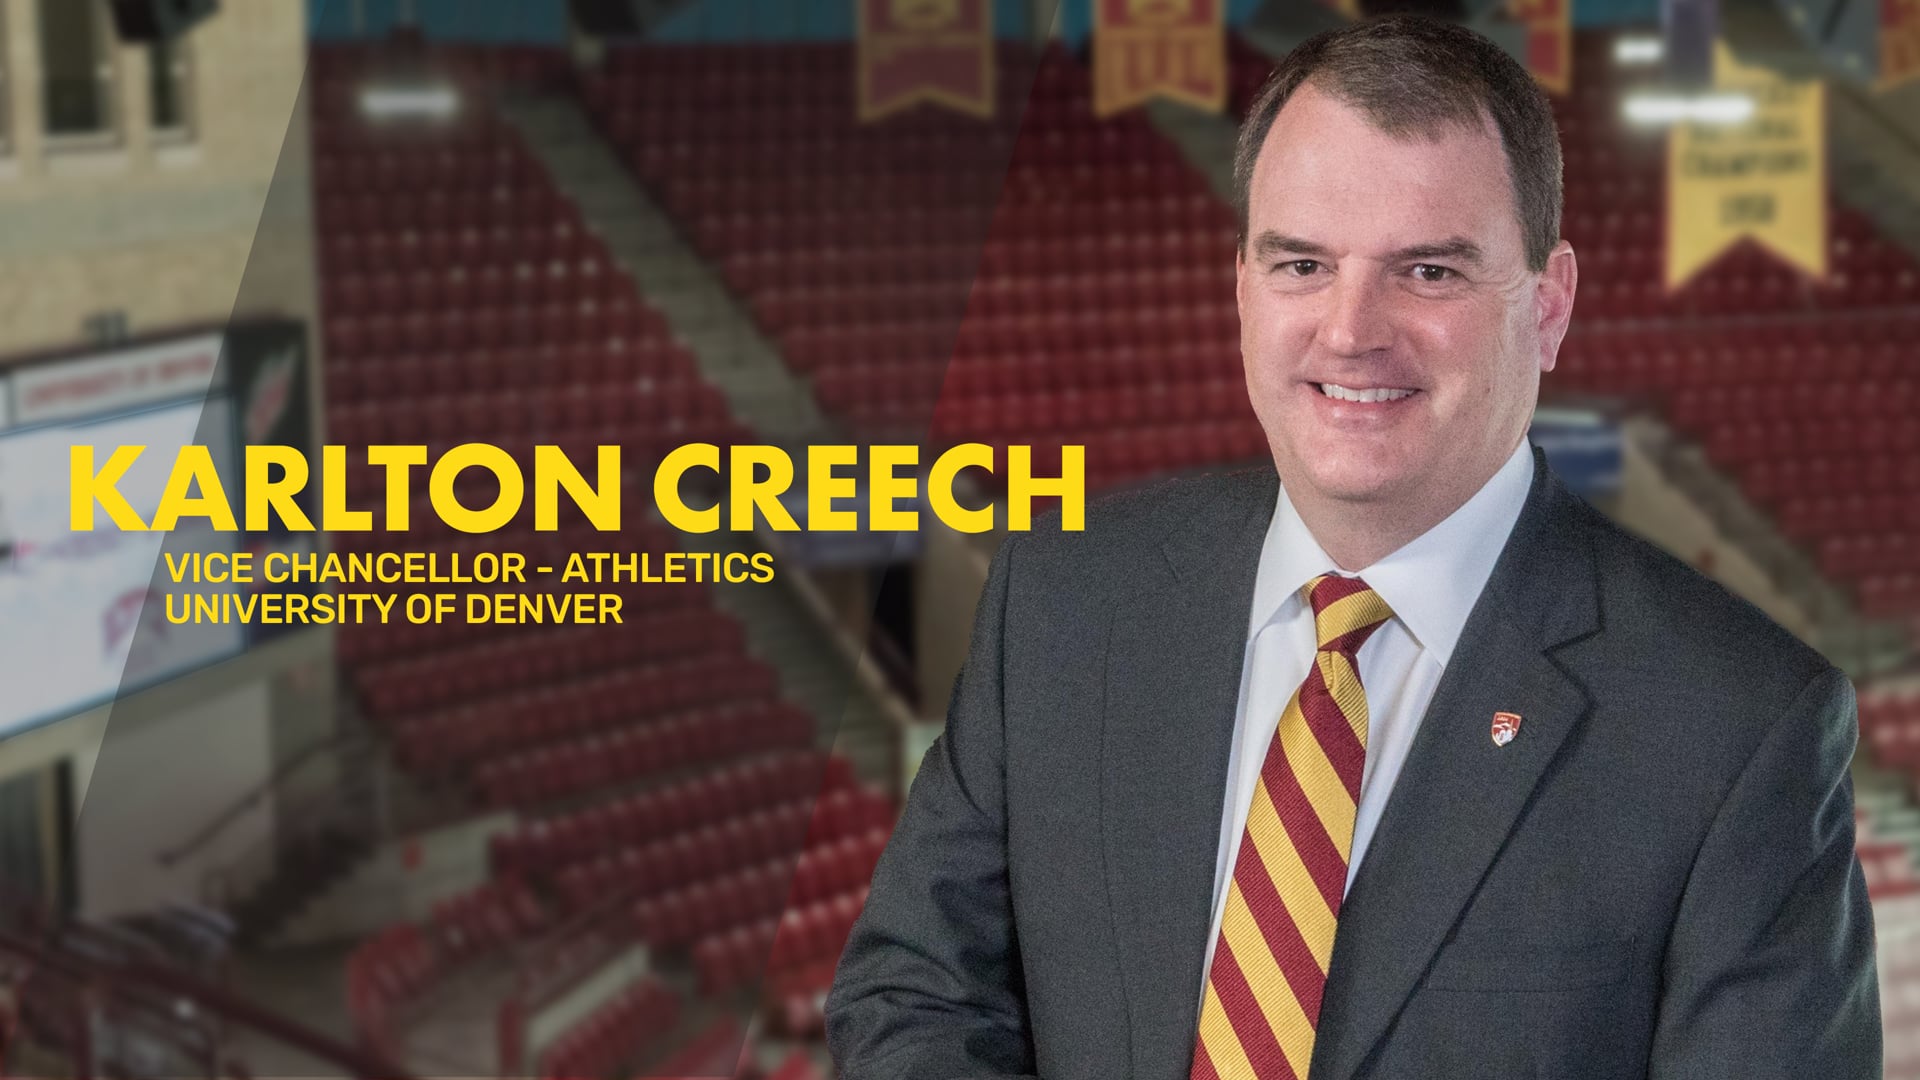 KARLTON CREECH | Vice Chancellor of Athletics, University of Denver